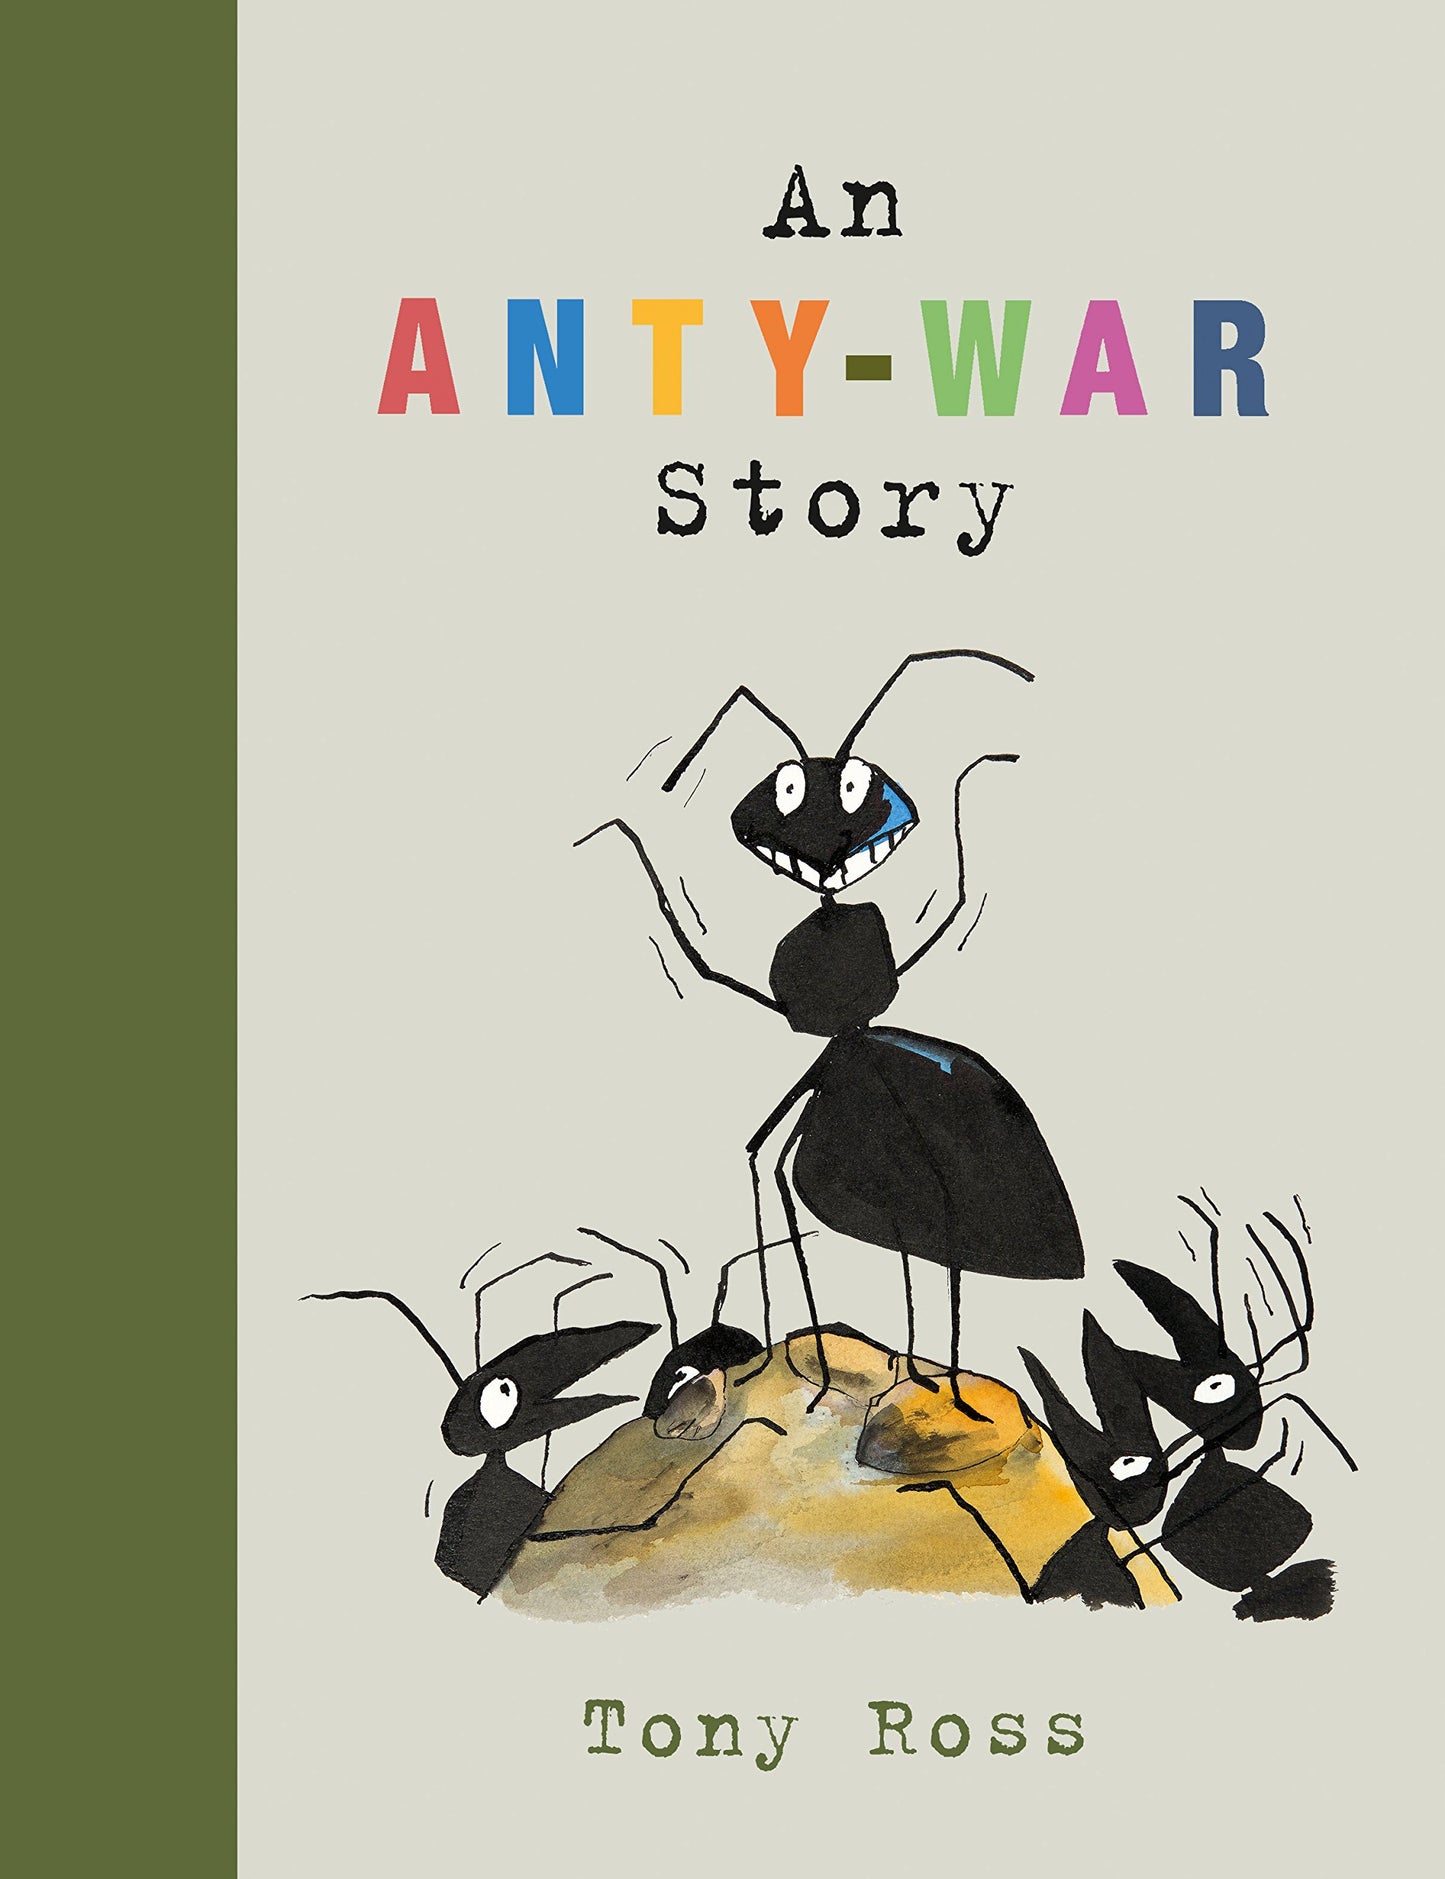 An Anty-War Story by Tony Ross